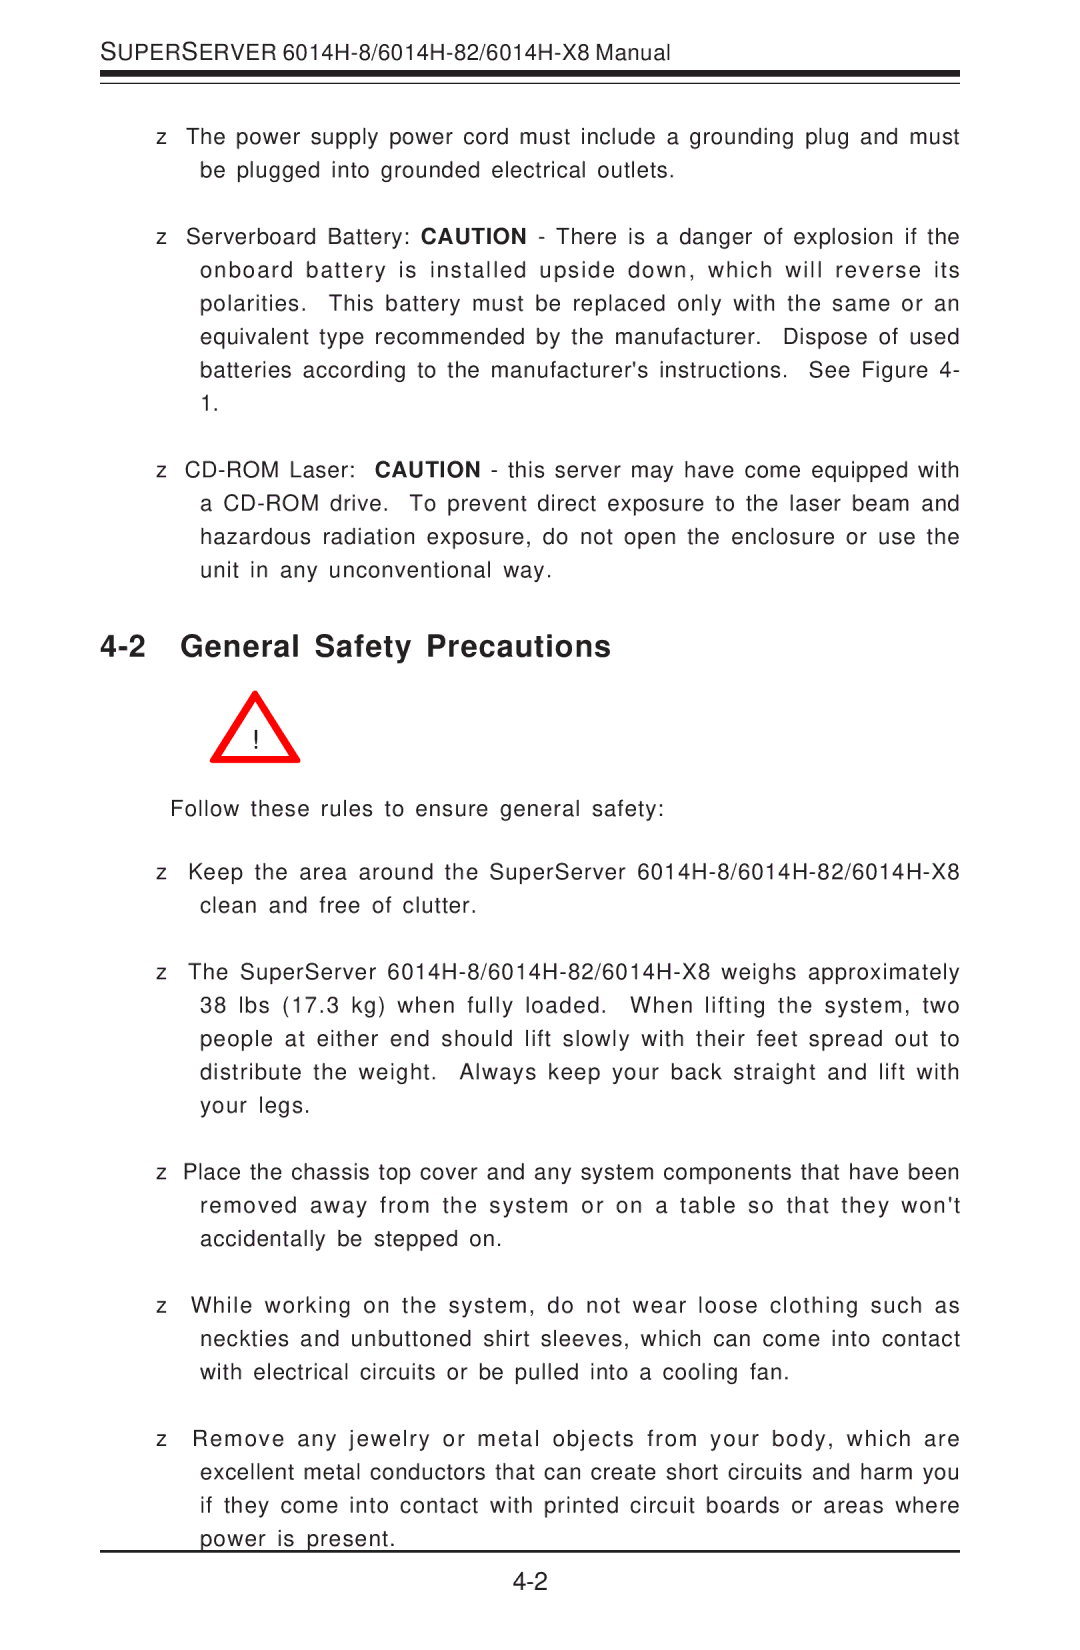 SUPER MICRO Computer 6014H-8 user manual General Safety Precautions 